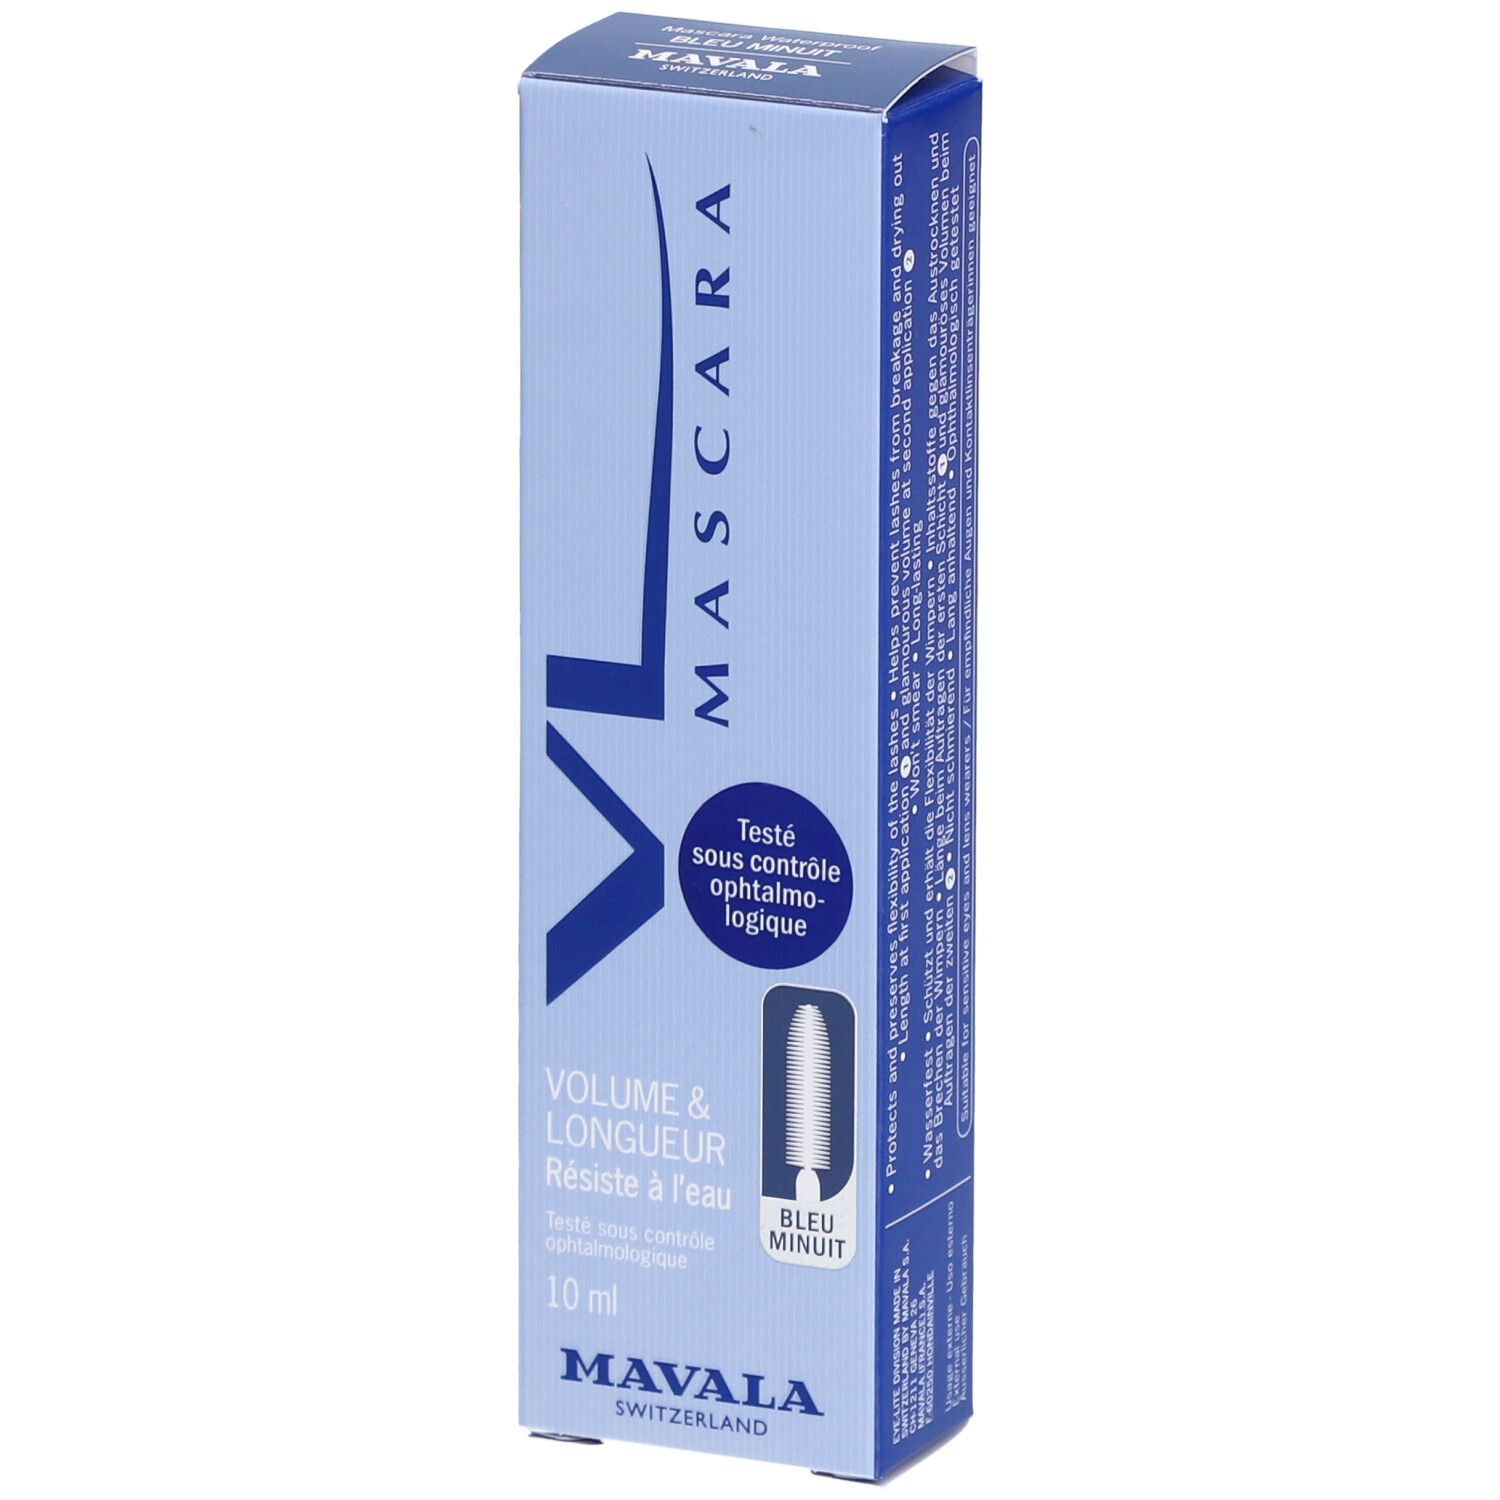 Mavala Mascaras Volume & Longueur Waterproof Bleu Minuit